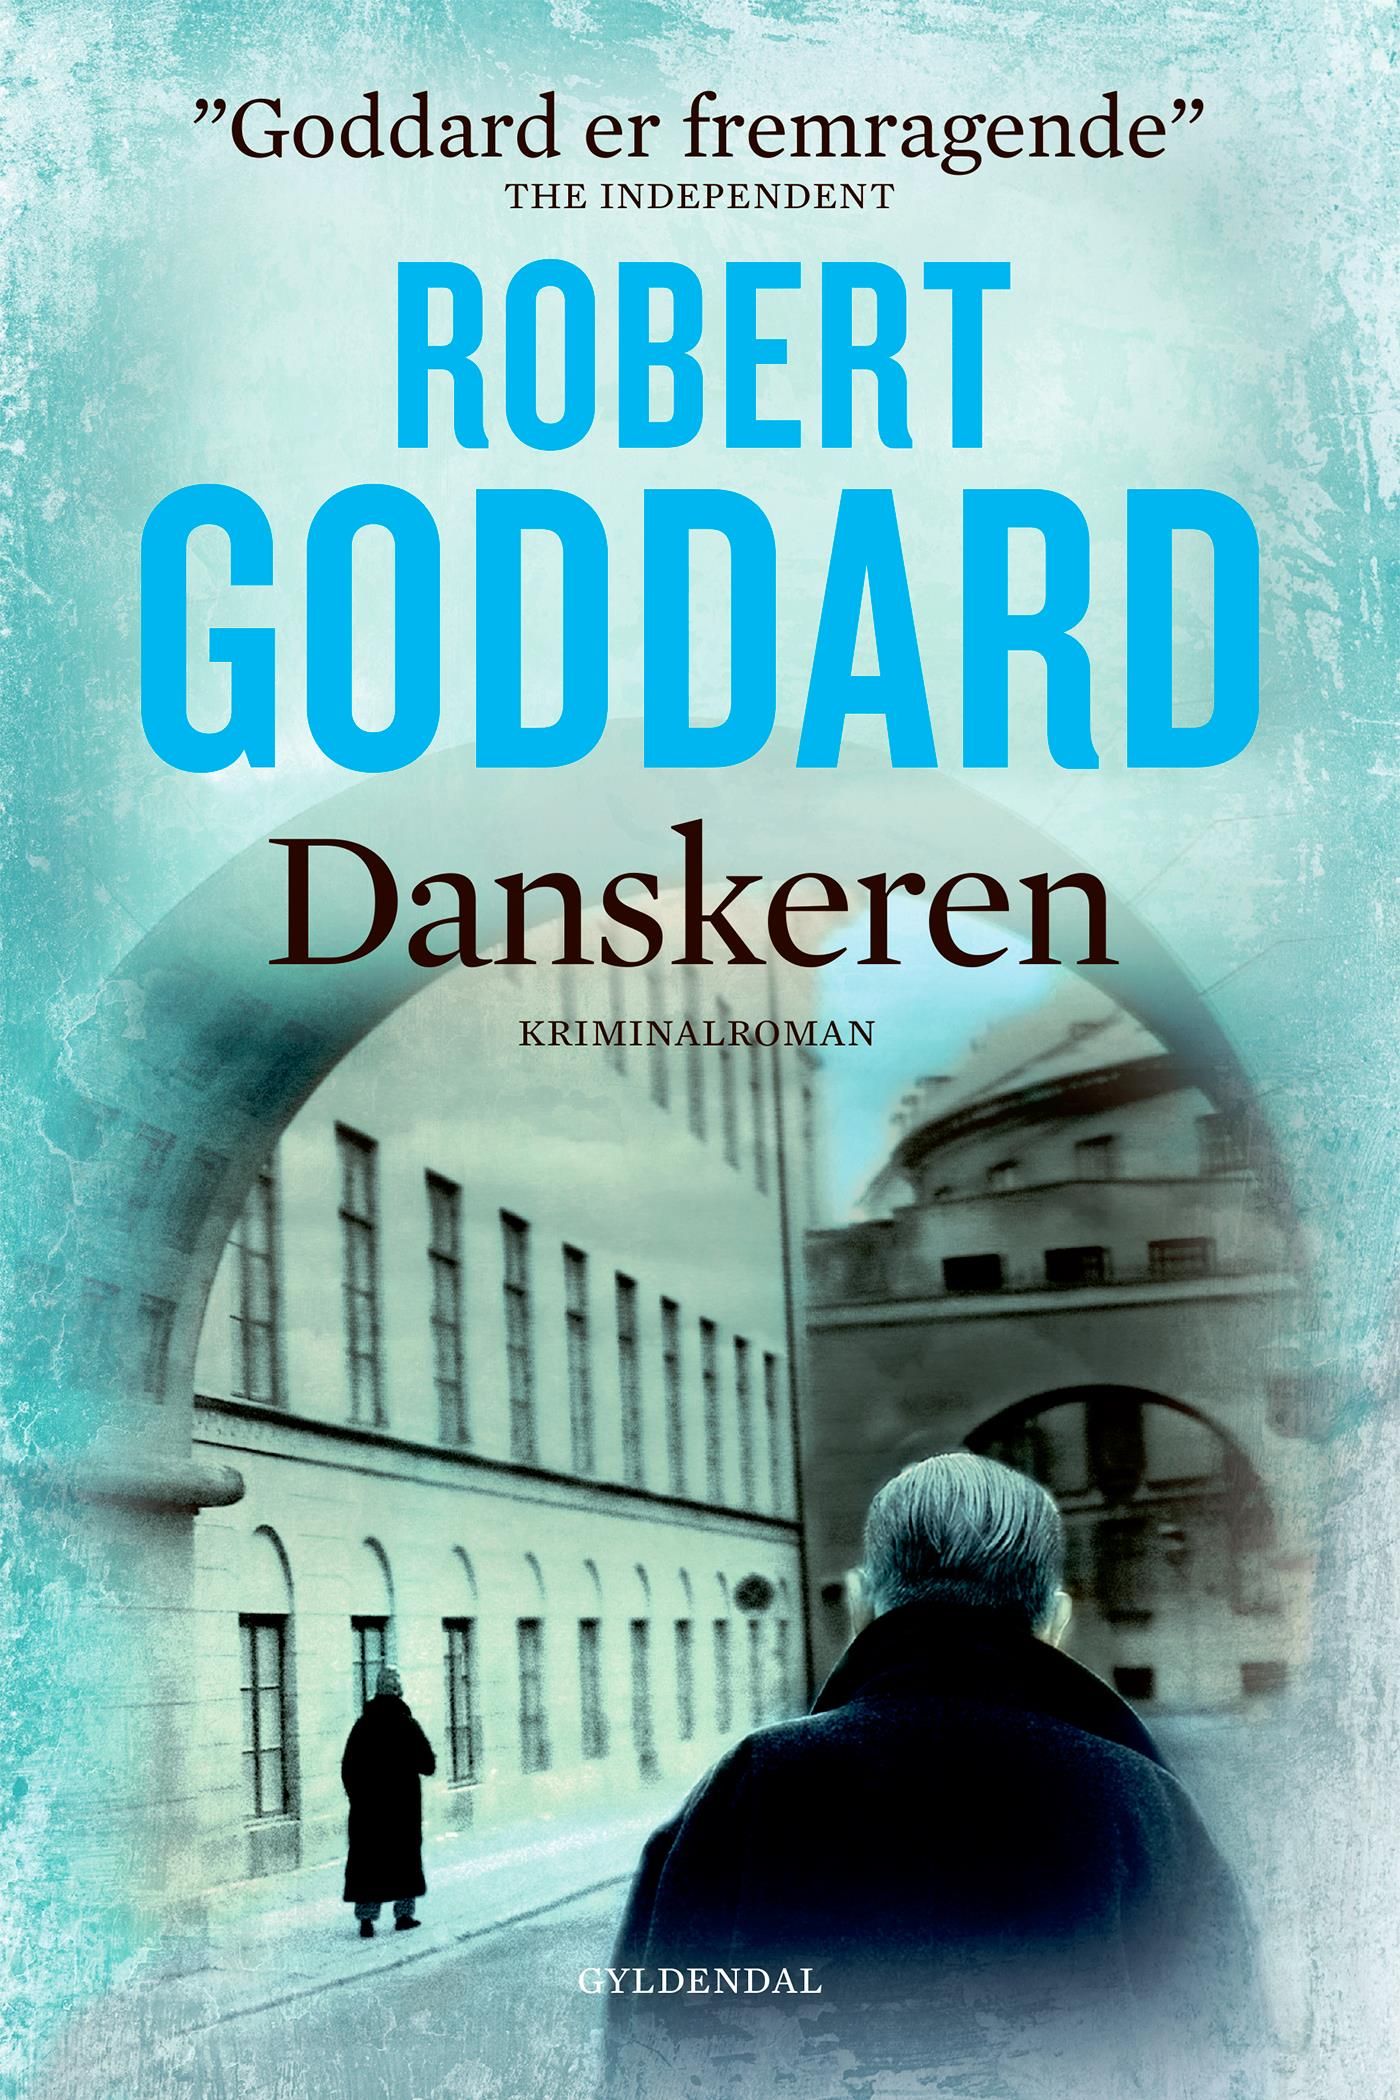 Danskeren, eBook by Robert Goddard